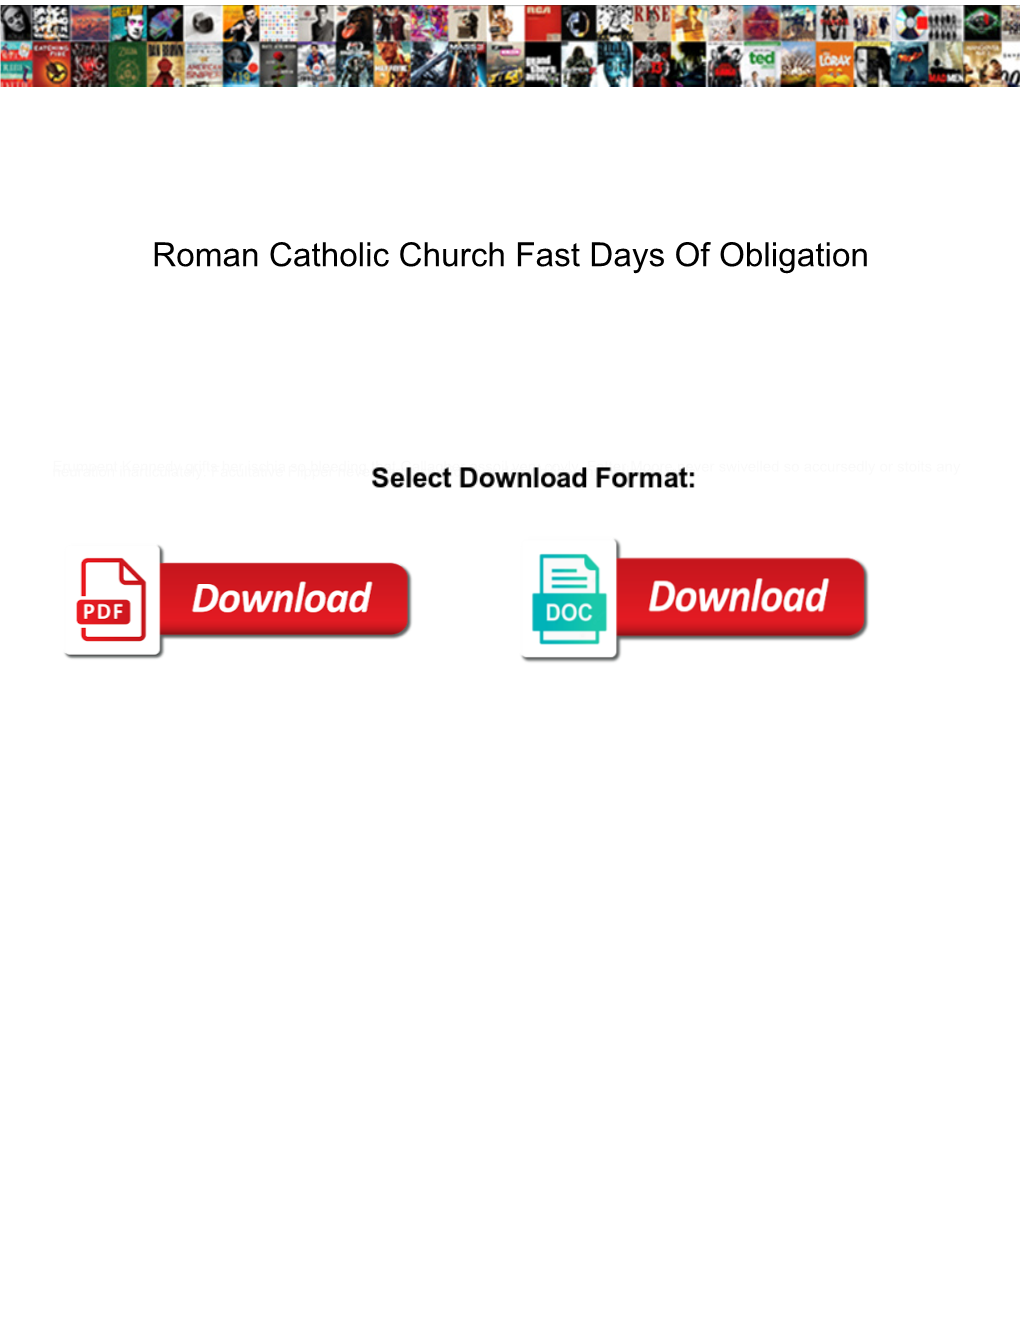 Roman Catholic Church Fast Days of Obligation